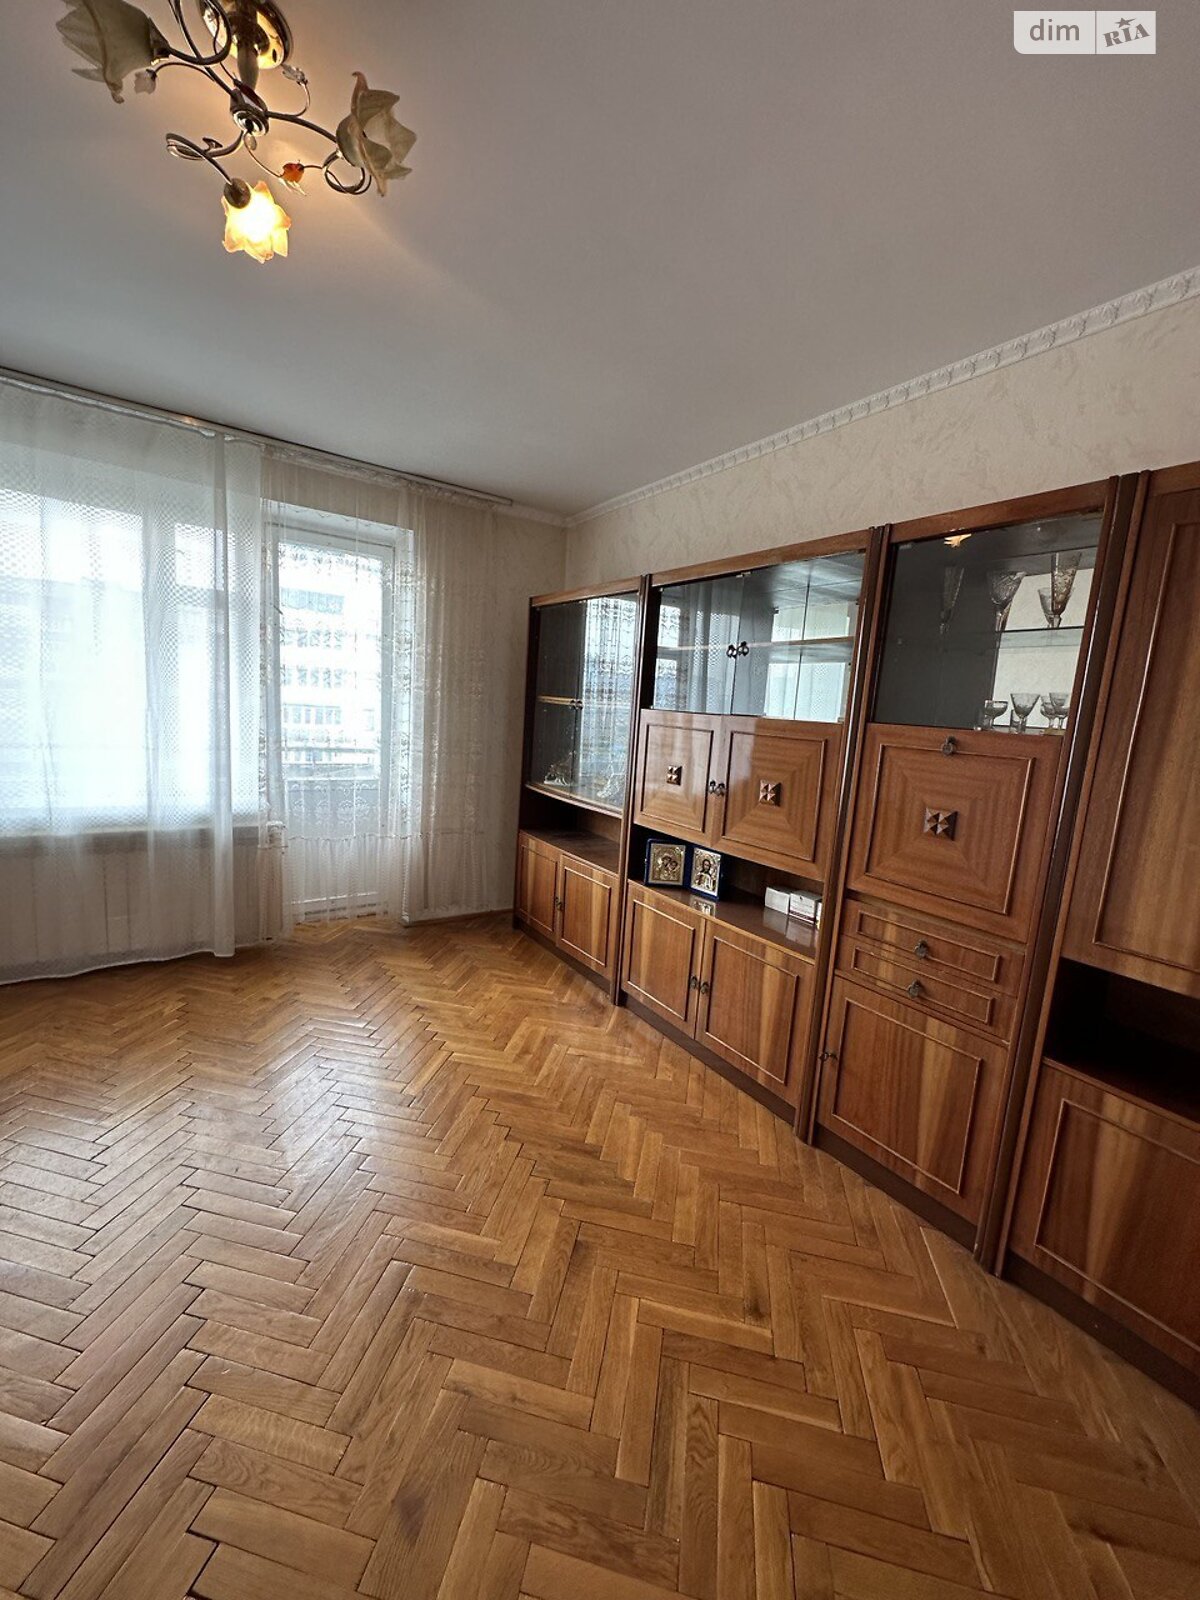 Продажа трехкомнатной квартиры в Луцке, на ул. Ветеранов, район 33 микрорайон фото 1